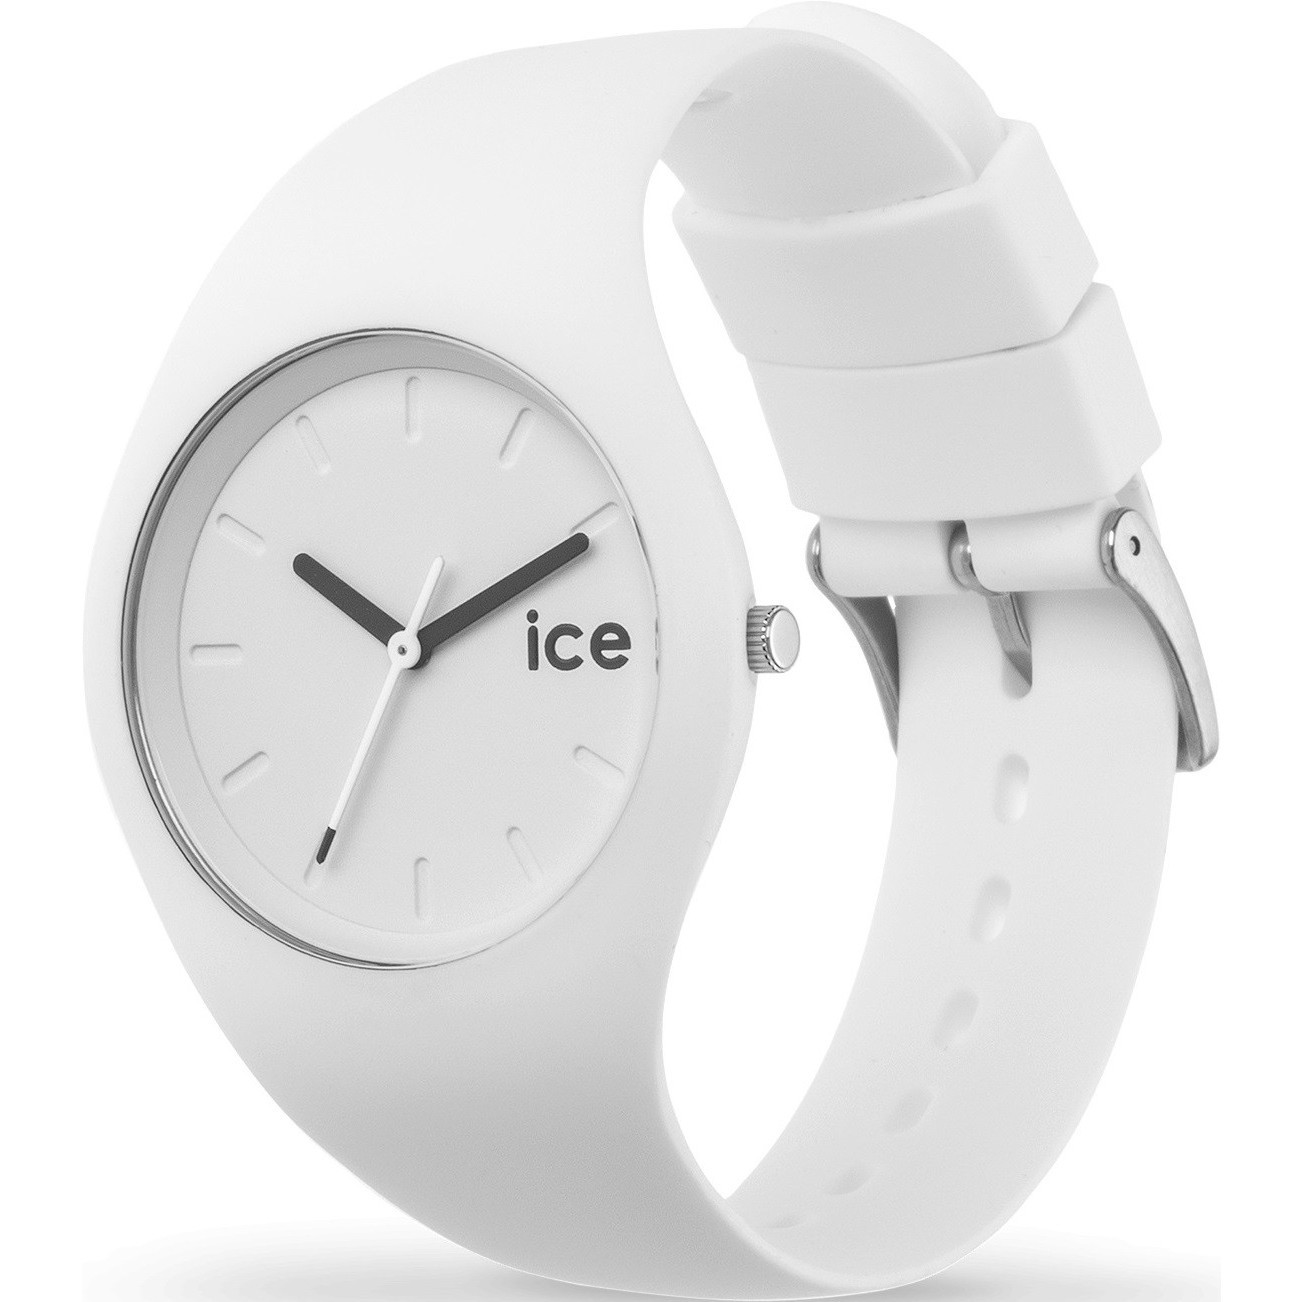 Часы Portobello Ice. Ice часы женские белые цена.